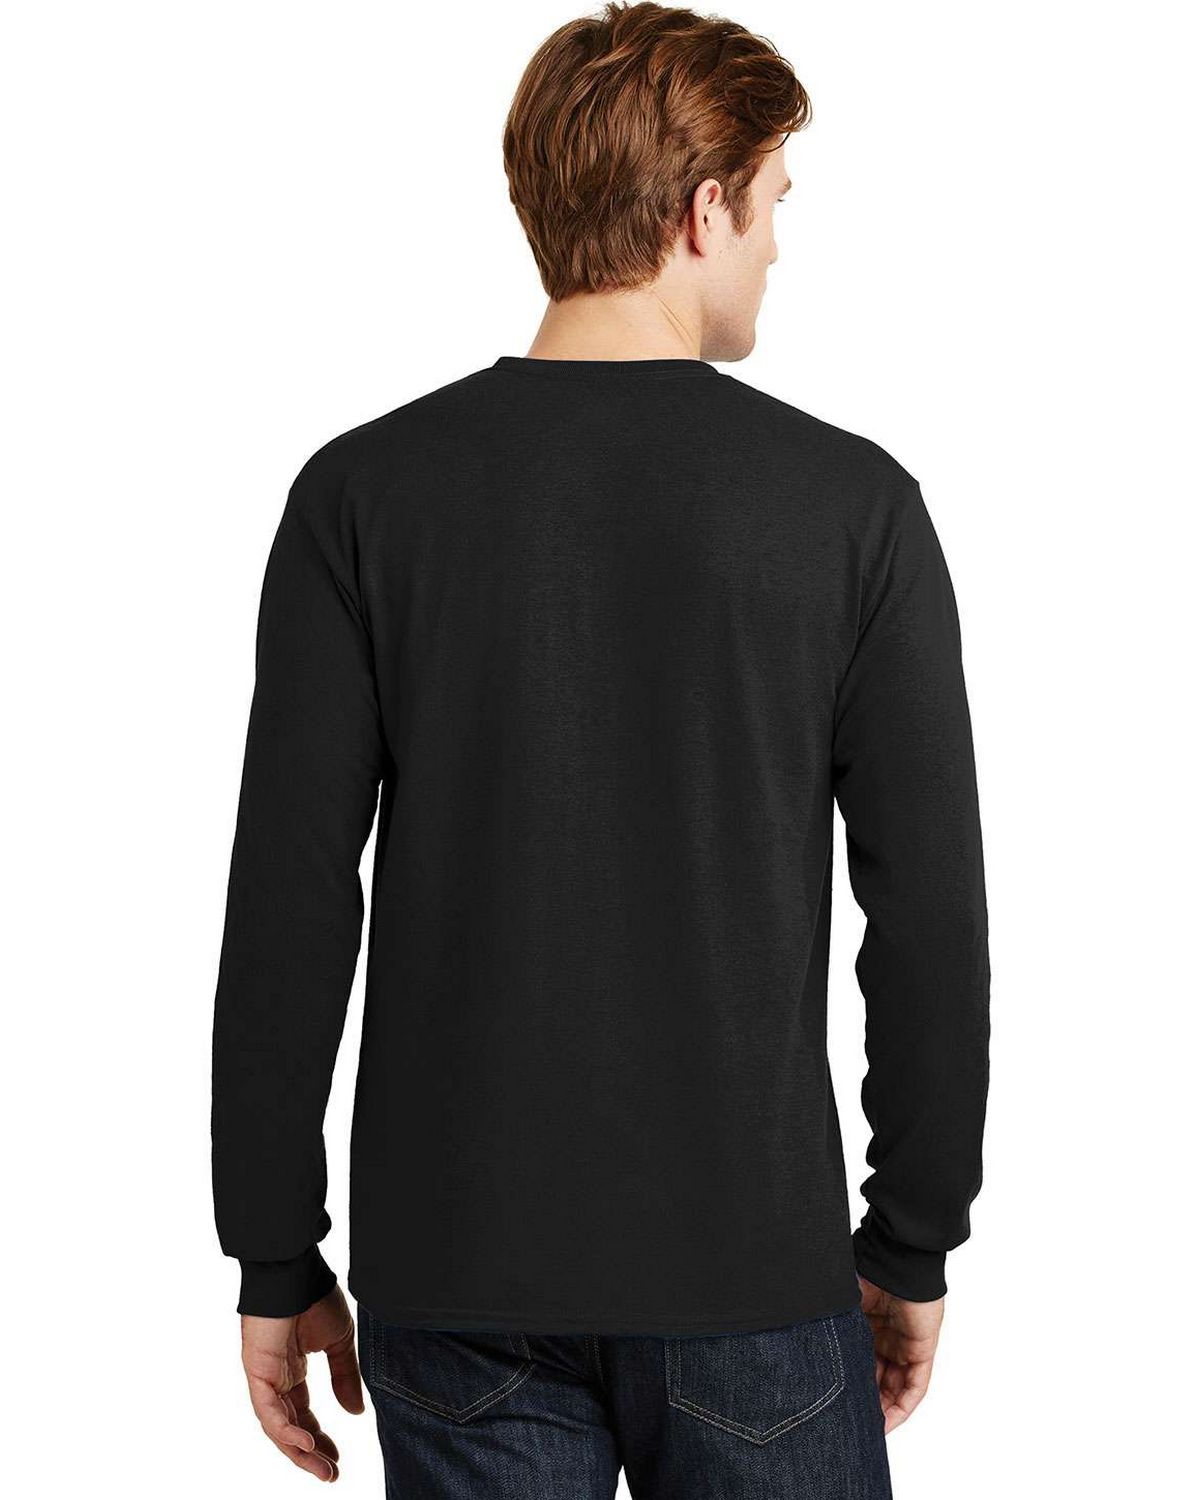 Gildan 8400 DryBlend Long Sleeve T Shirt - ApparelnBags.com